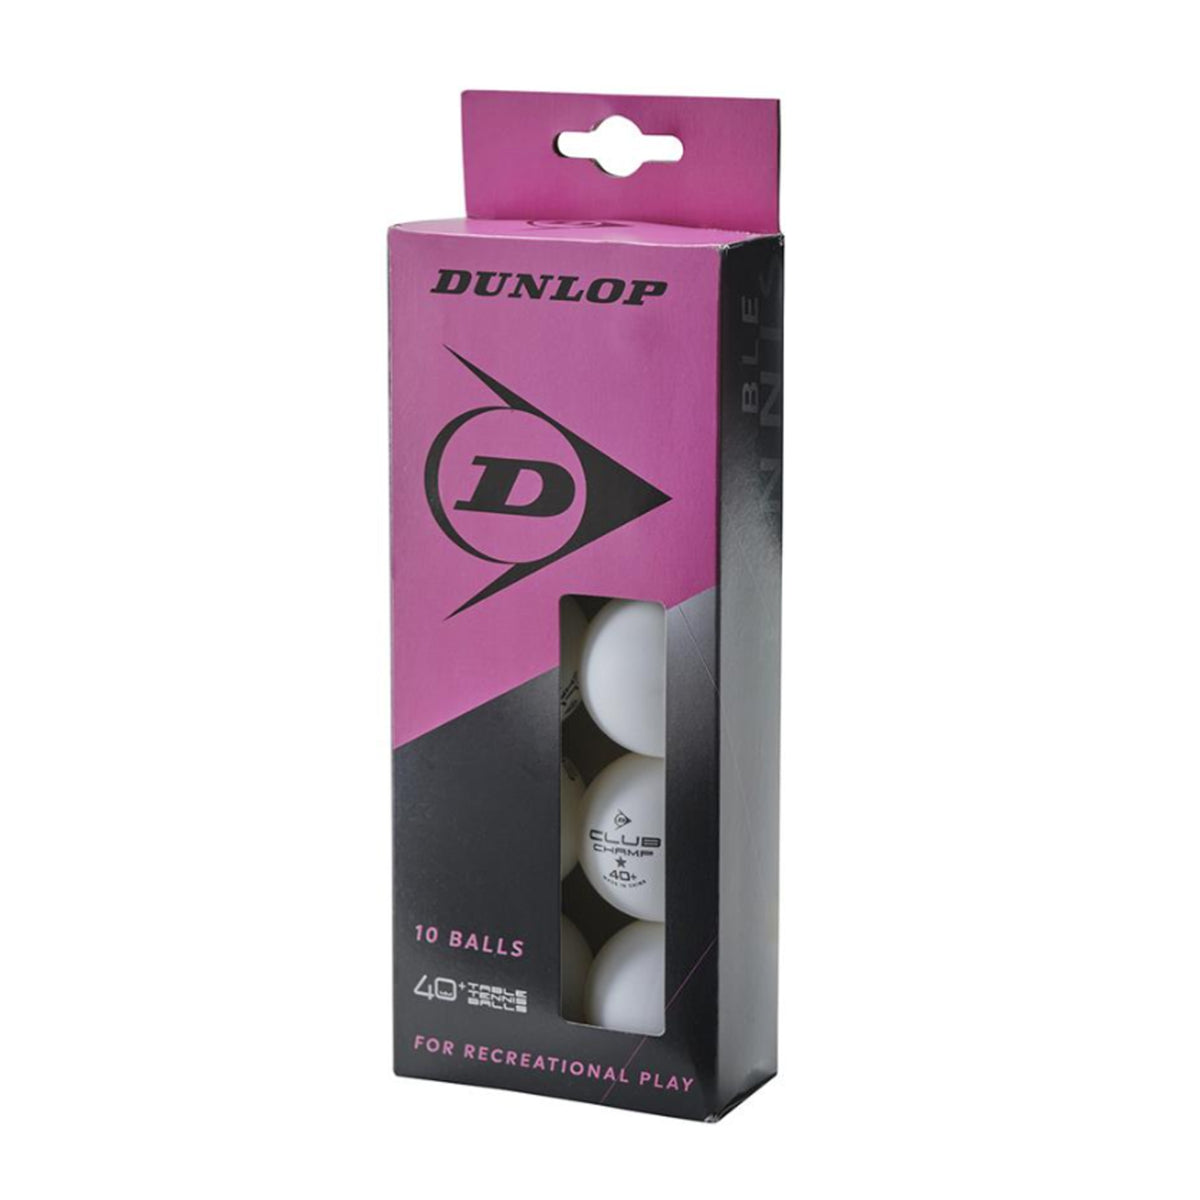 Dunlop Table Tennis Balls - Box of 10